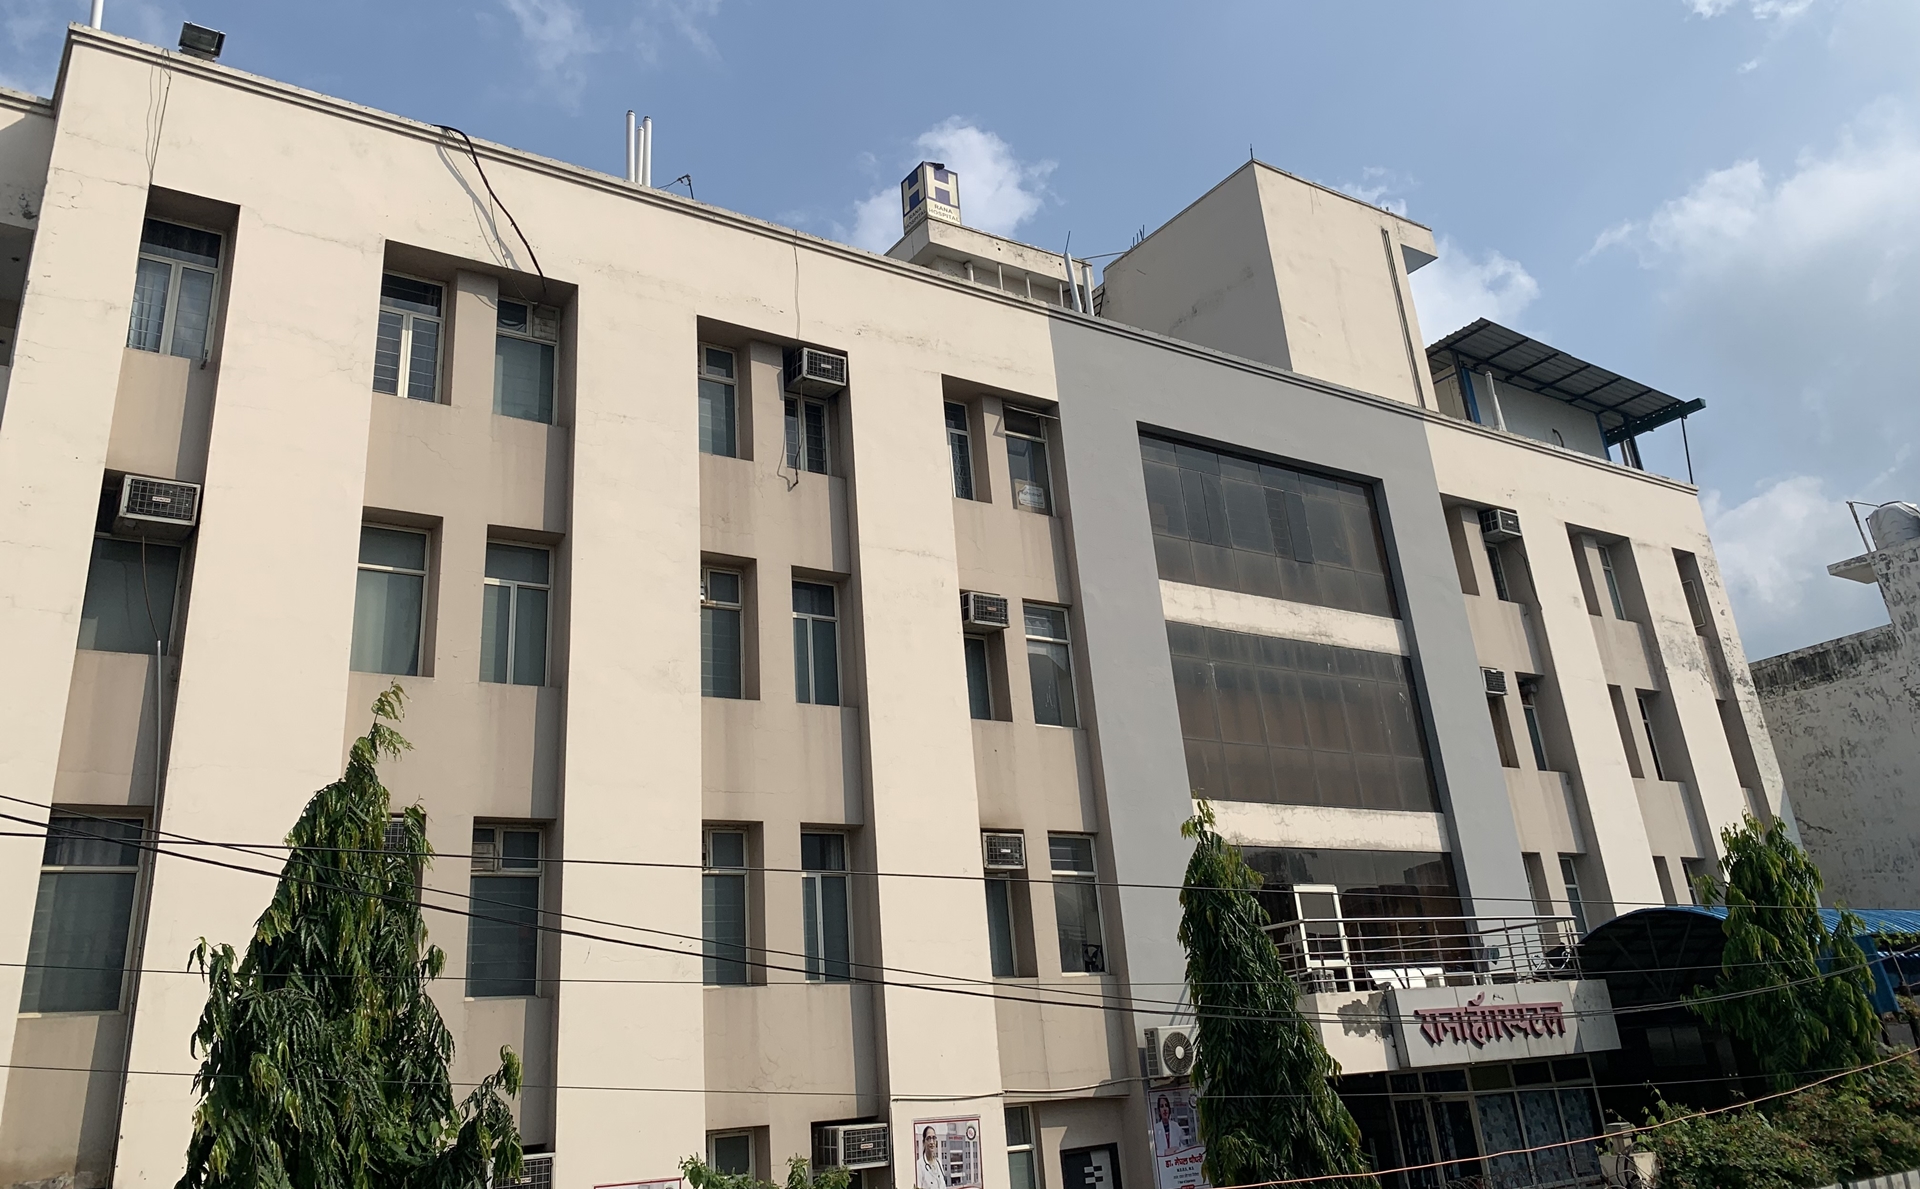 Hospital in Bulandshahr